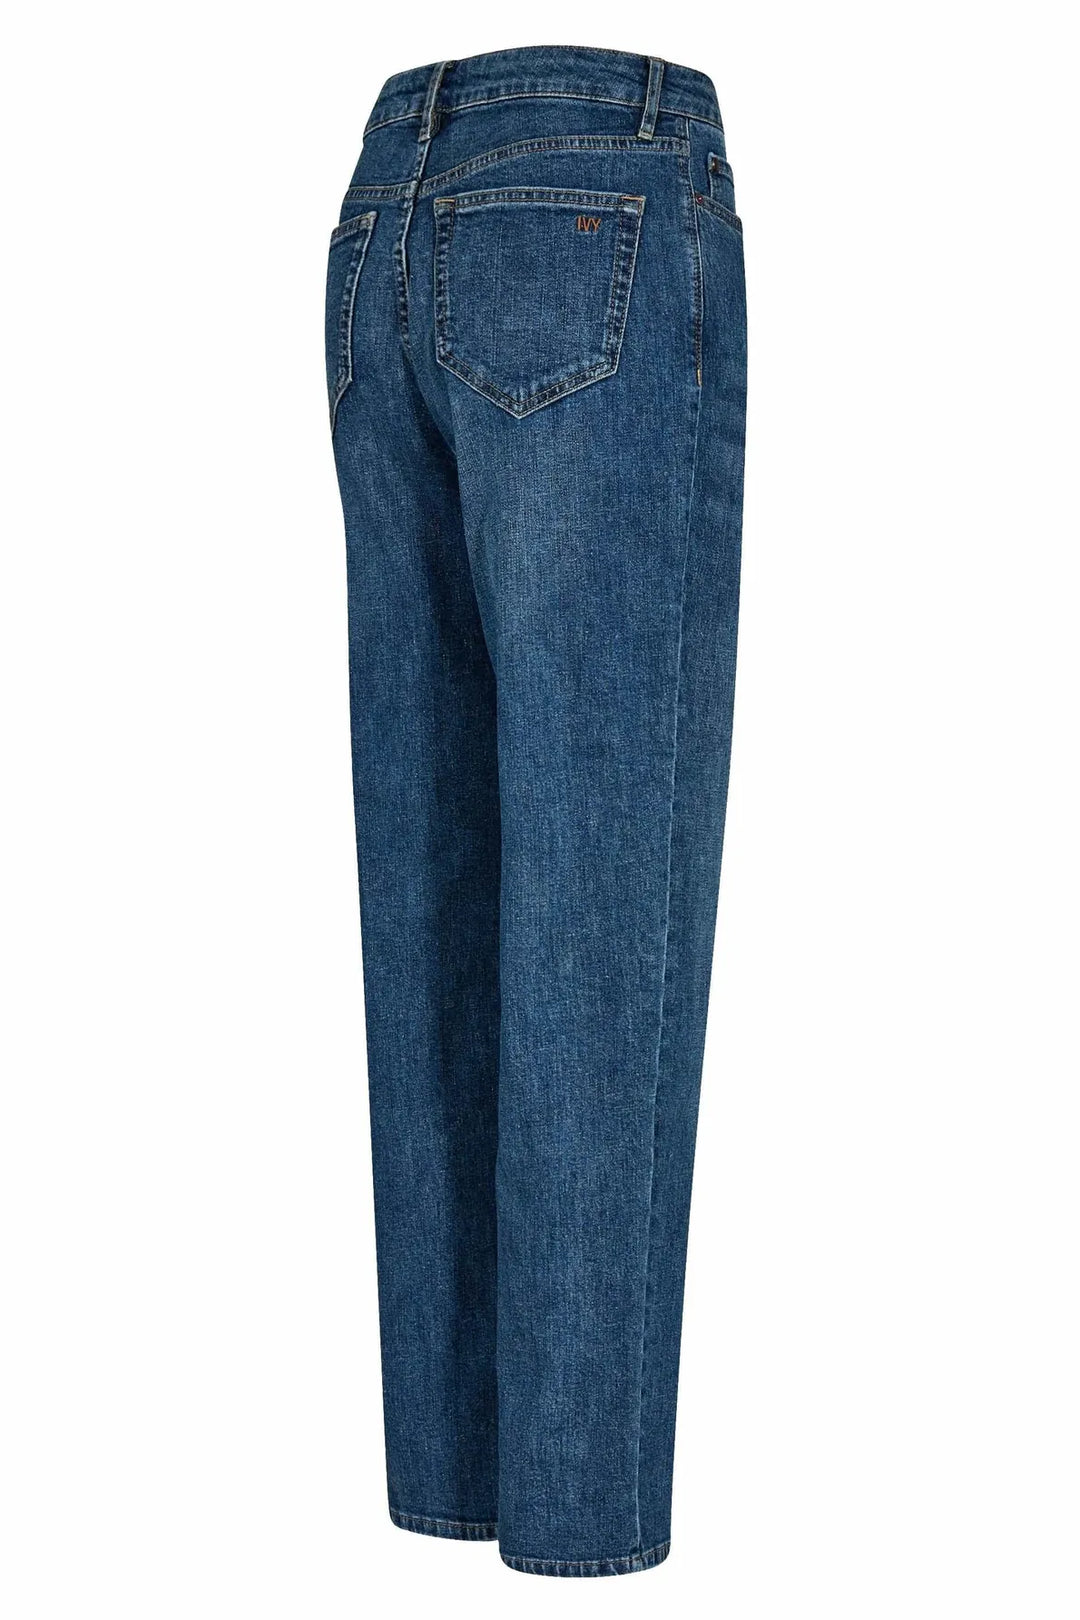 Jeans | IVY Copenhagen Tonya Wash Liverpool Street, Denim Blue